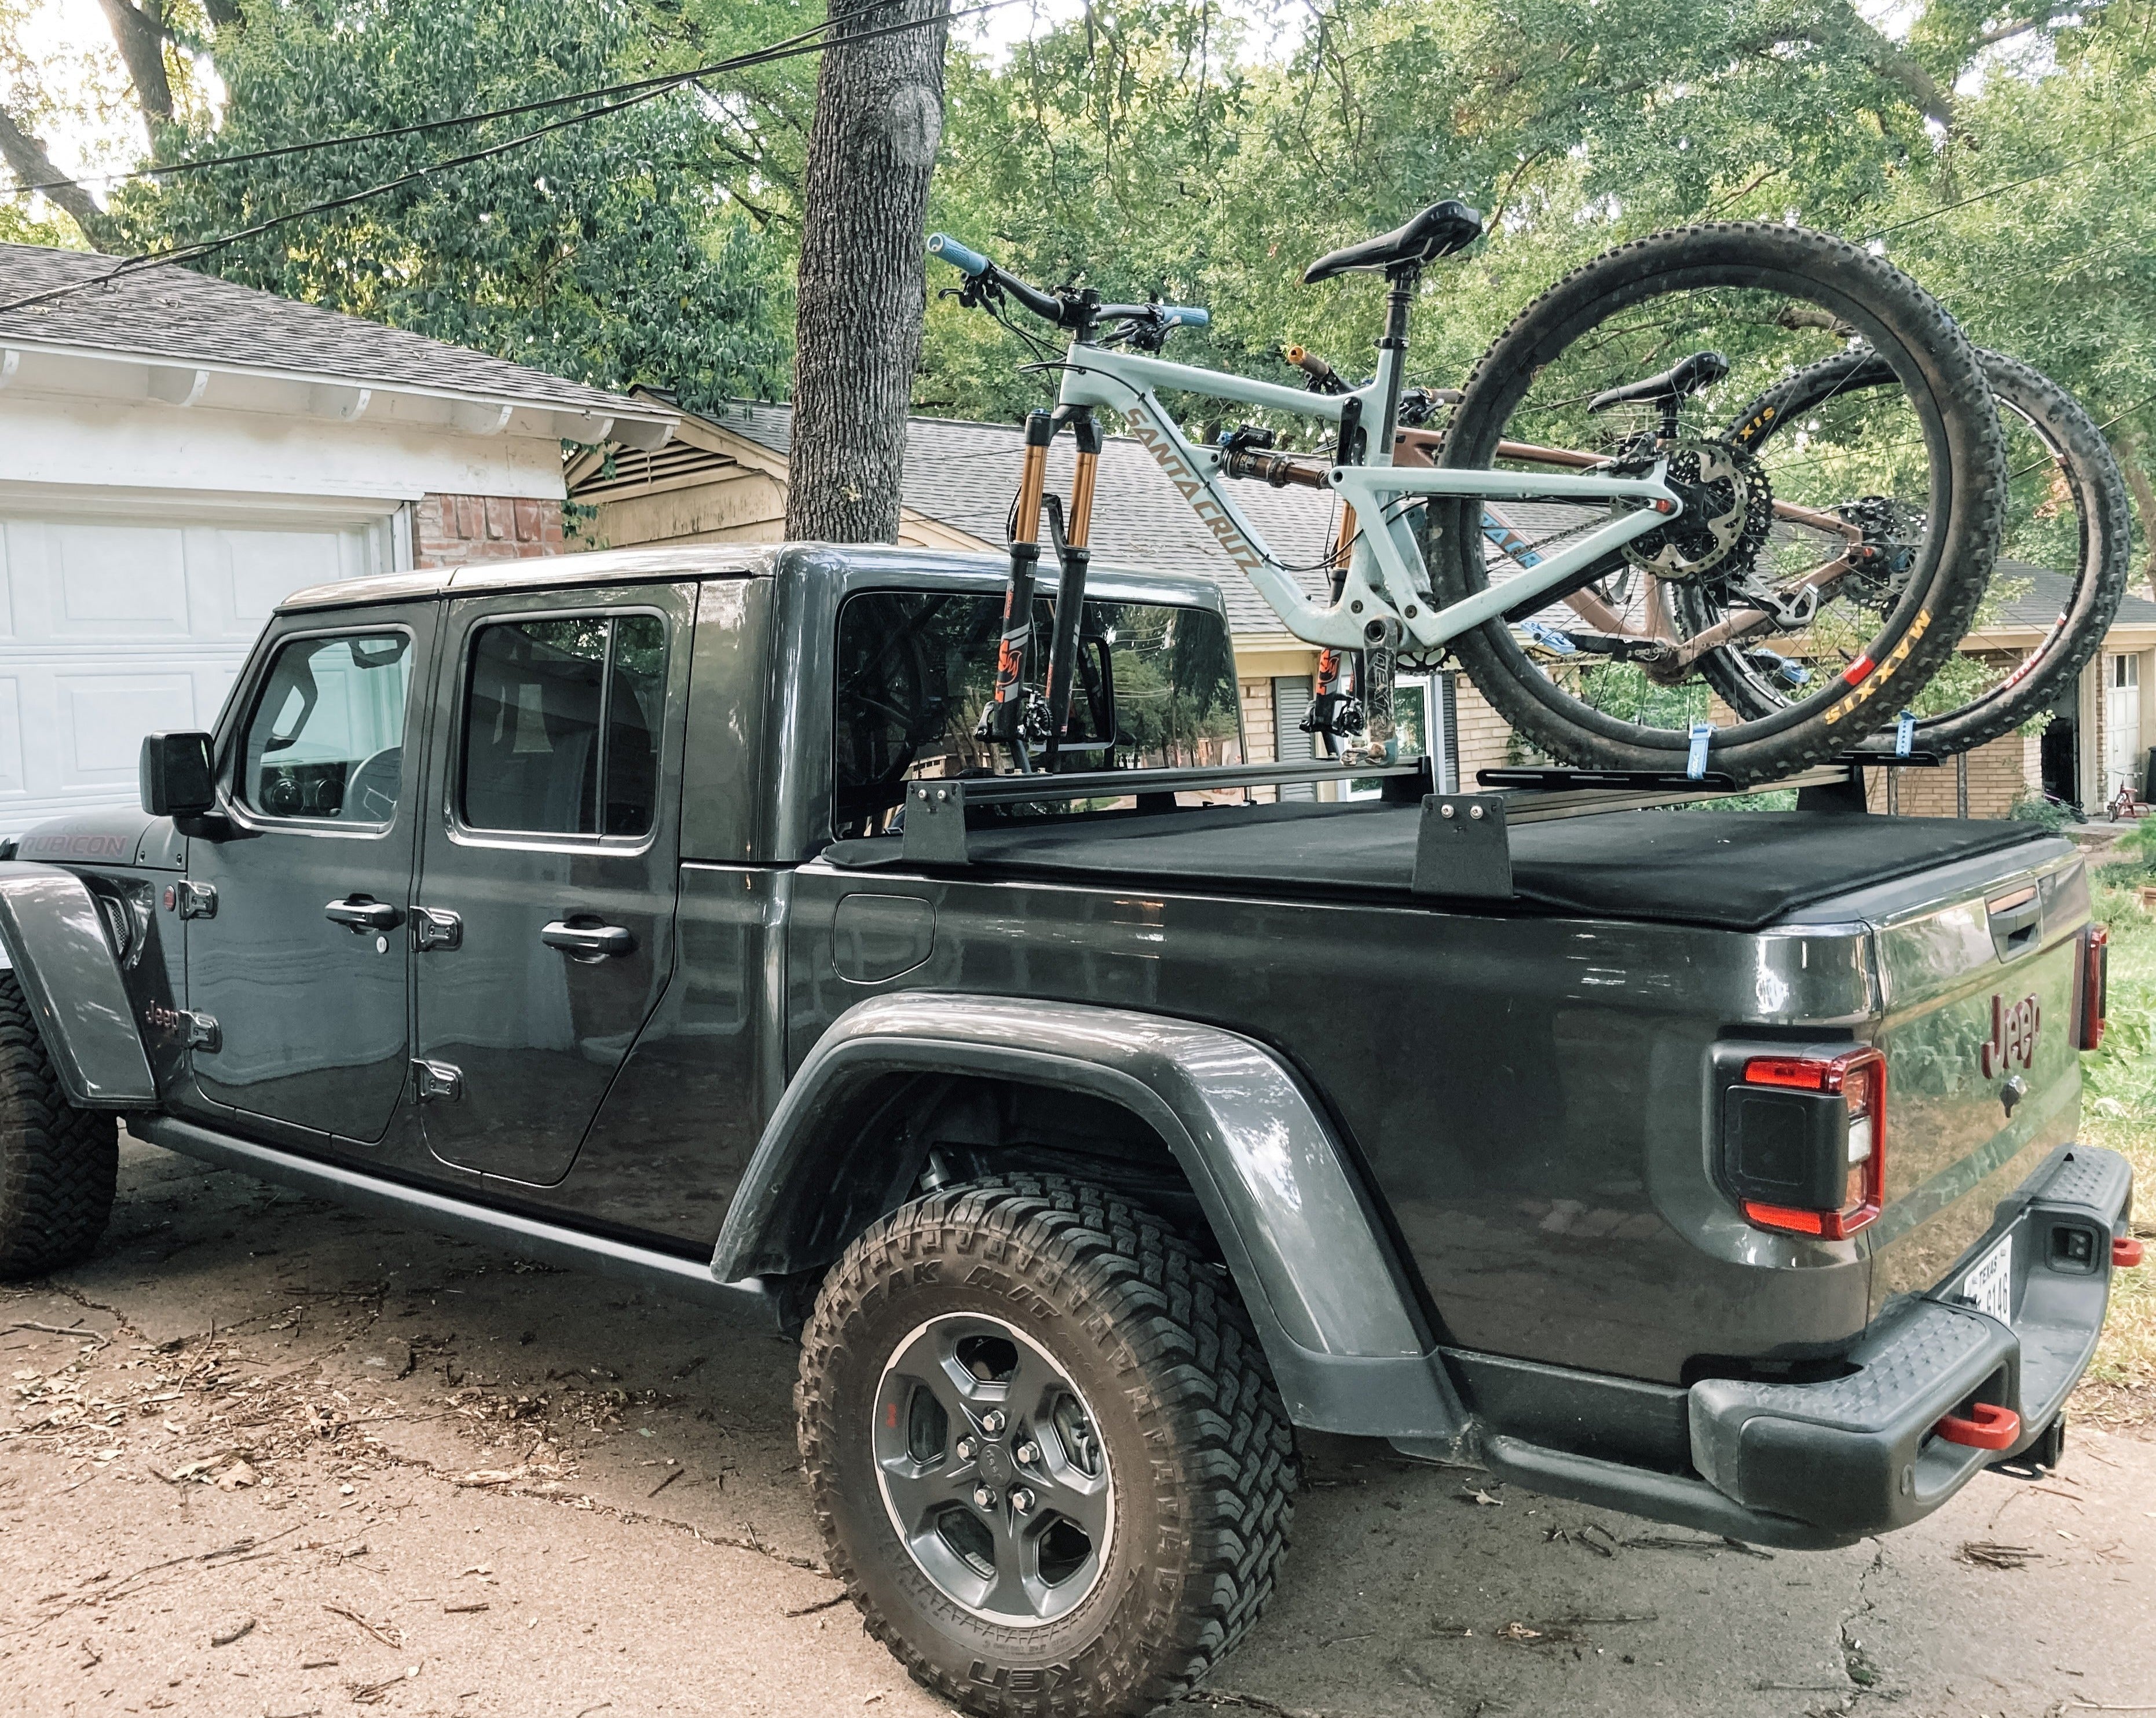 BillieBars - Bike Bundle with DropTop Fork Mount